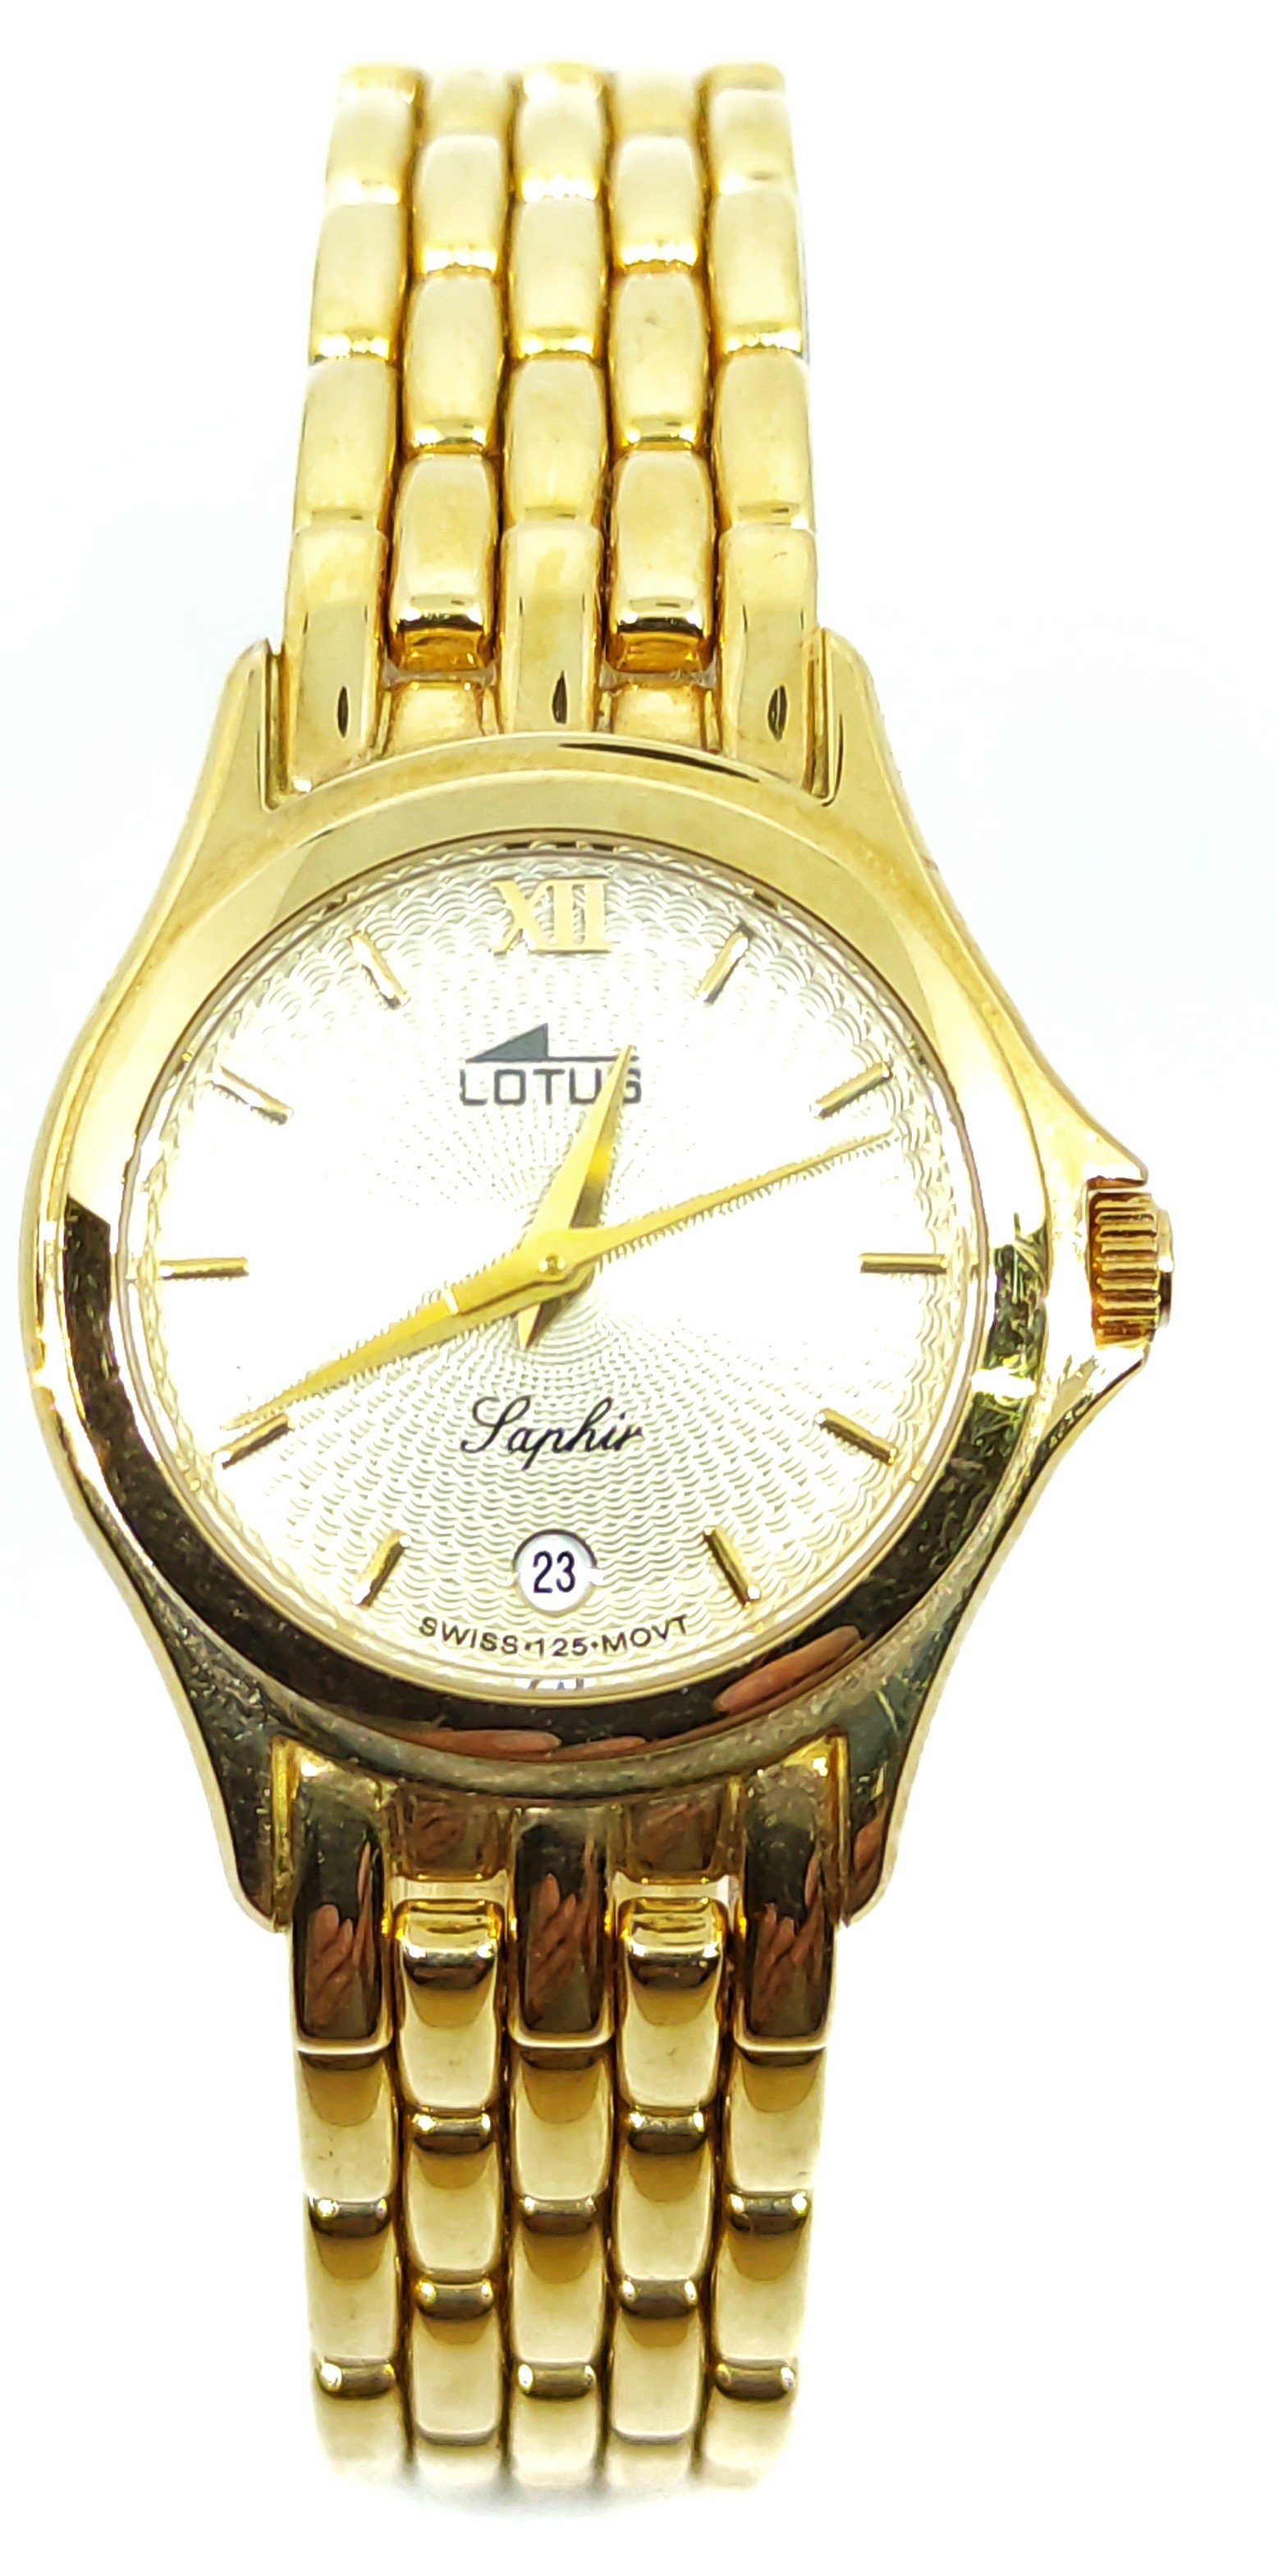 Reloj Lotus señora oro de 18 quilates.